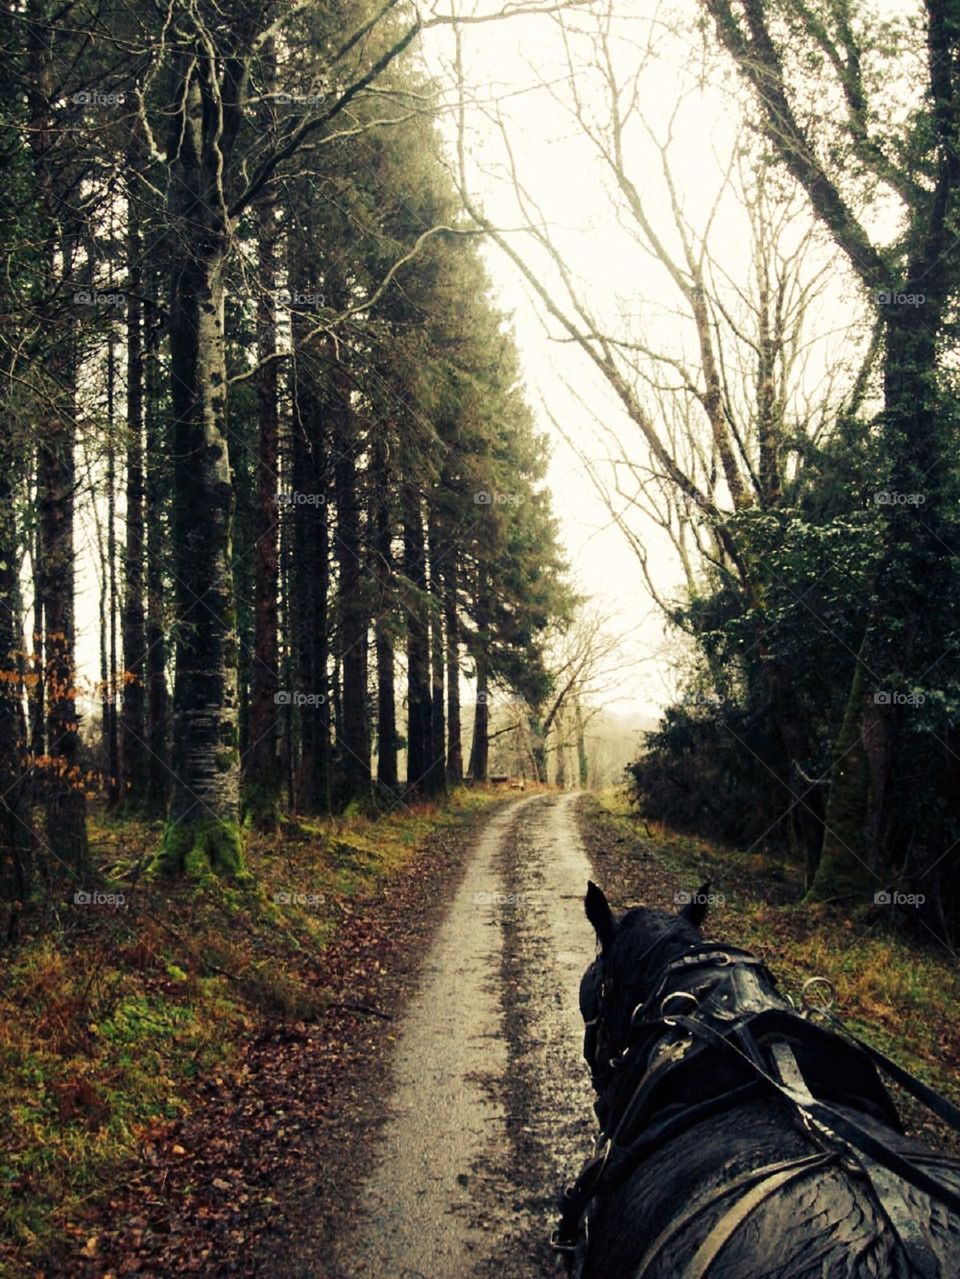 Killarney Trail